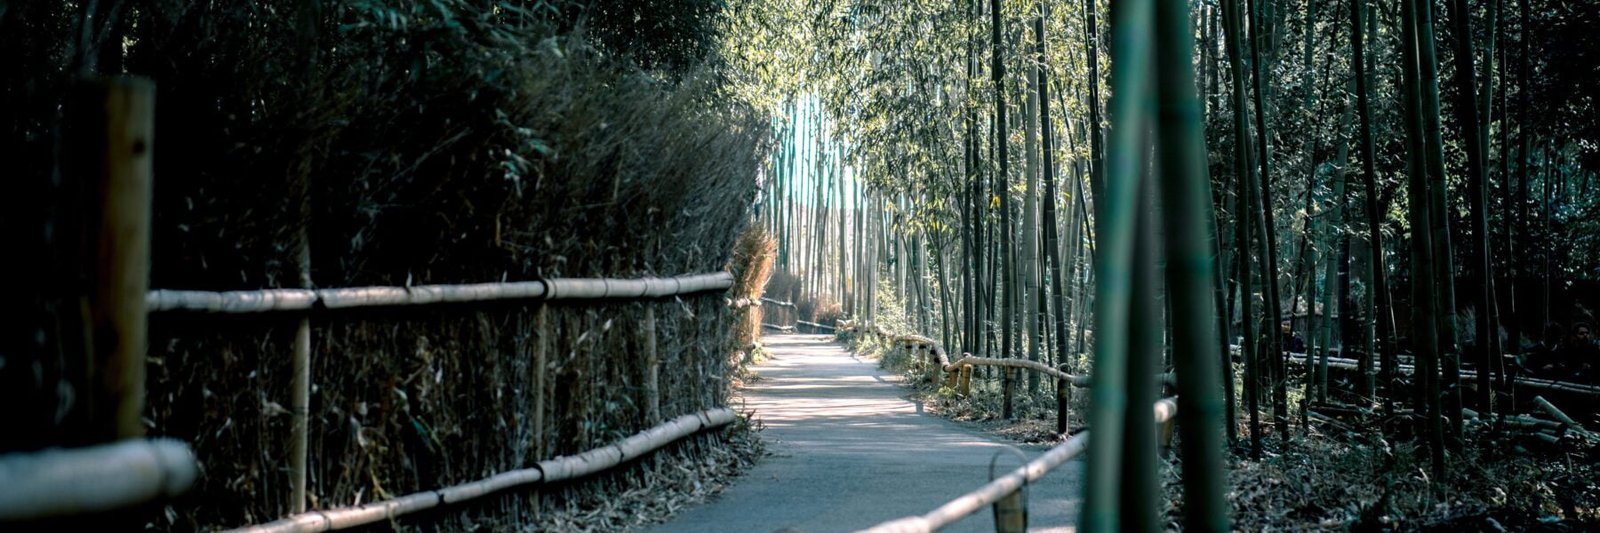 Bambouseraie d’Anduze